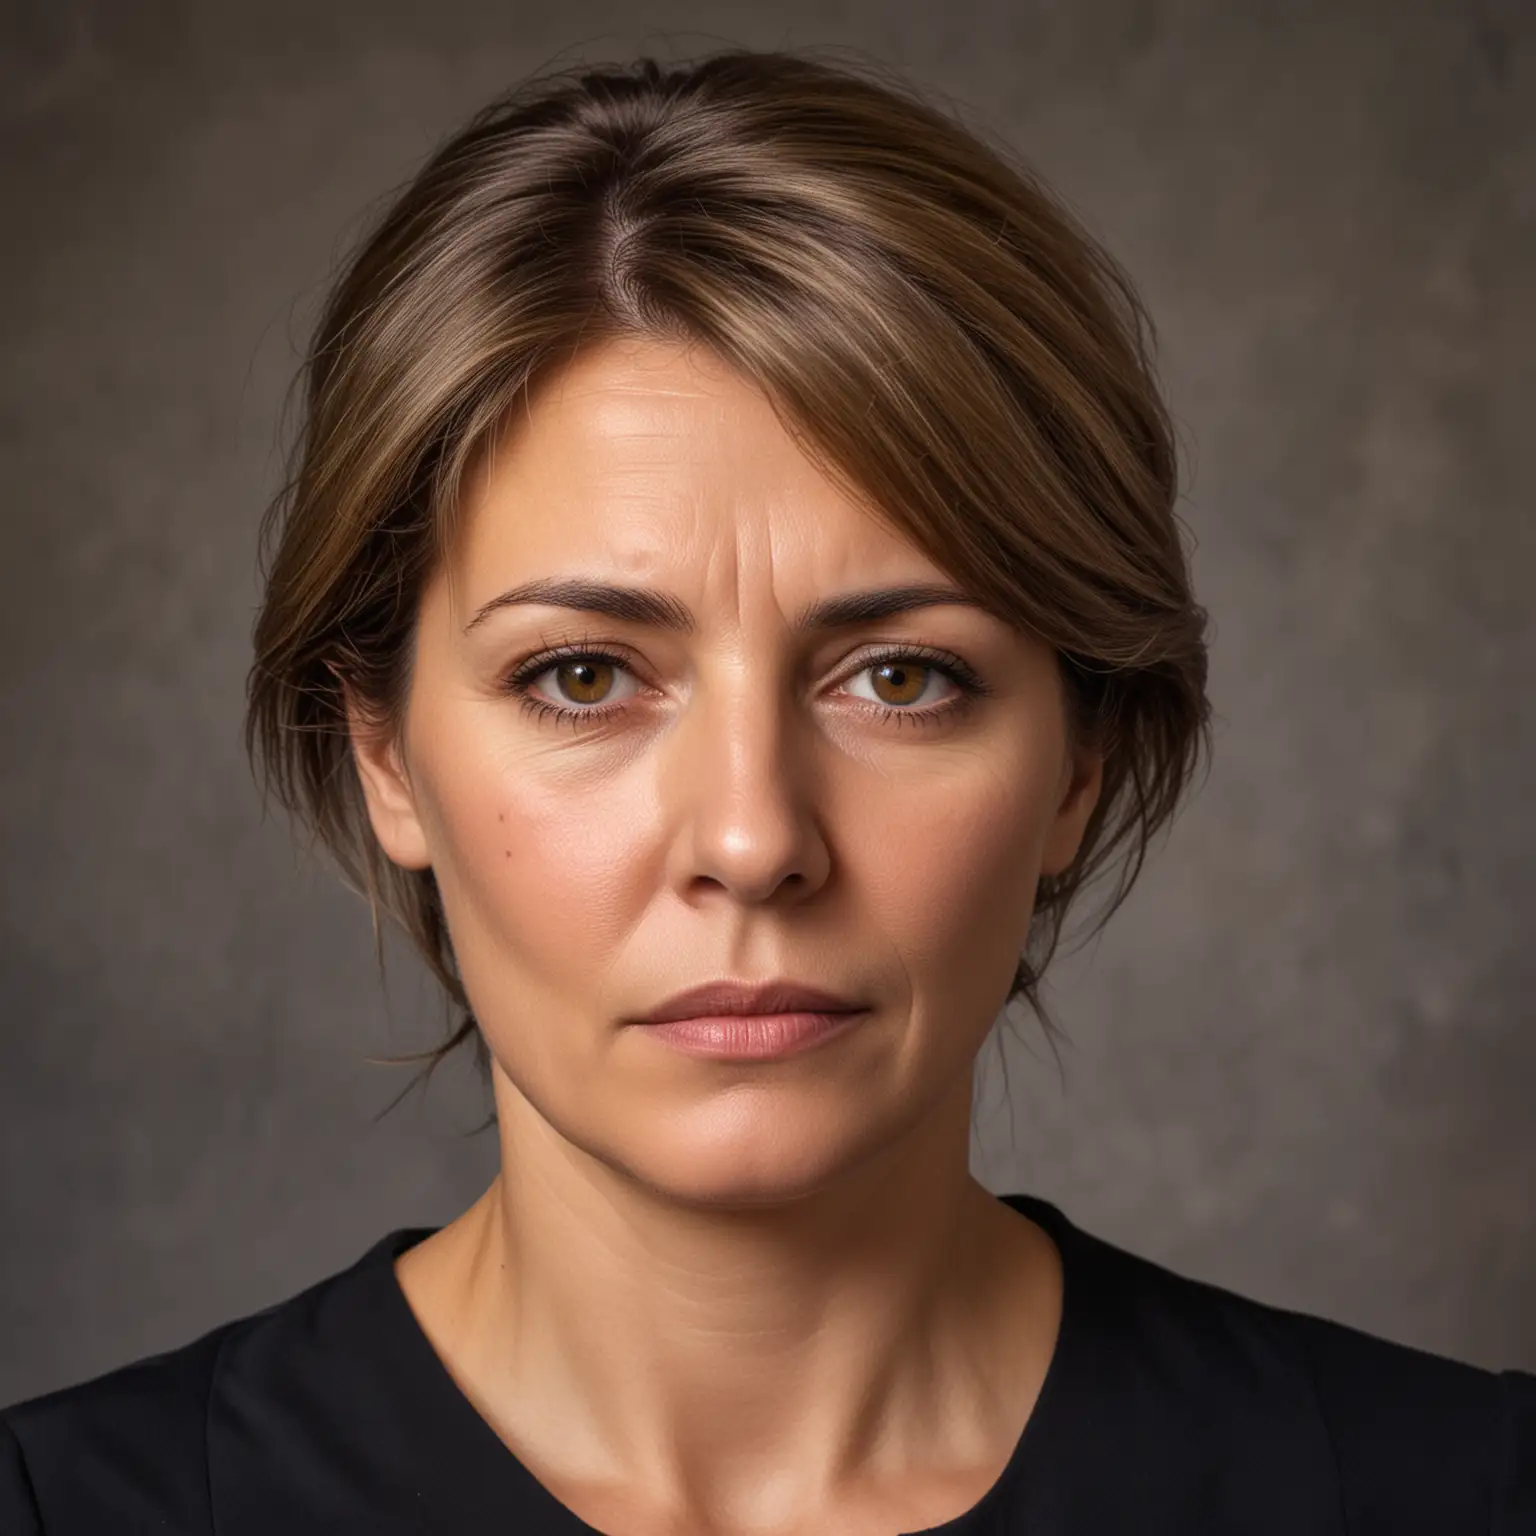 Portrait of a Serious European Woman Prosecutor in Black Dress